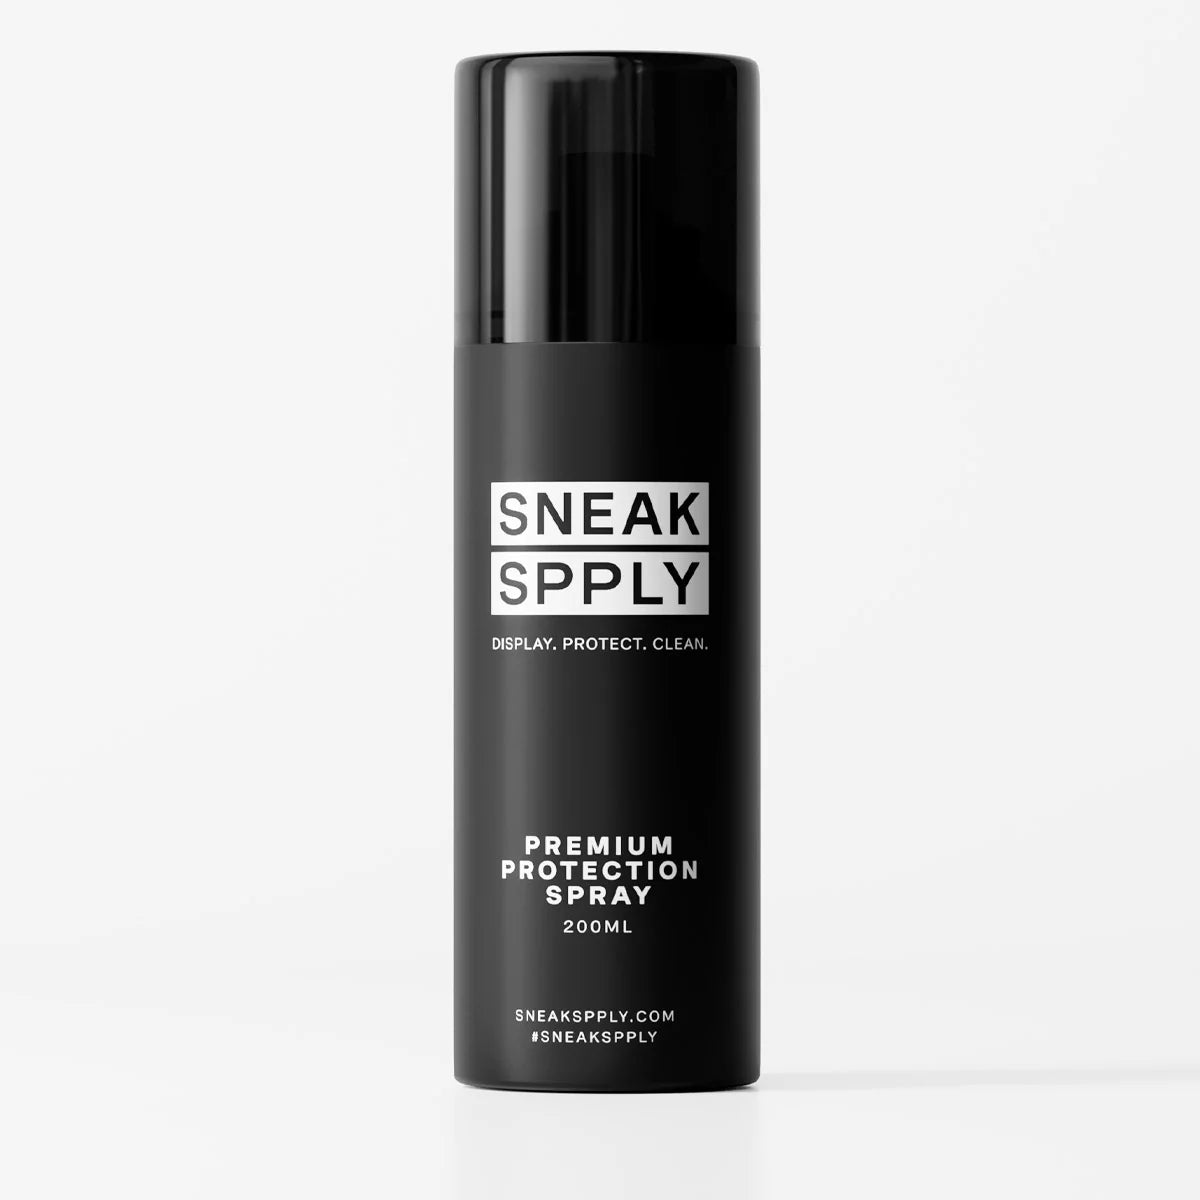 Sneak Spply Protection Spray, 200ML